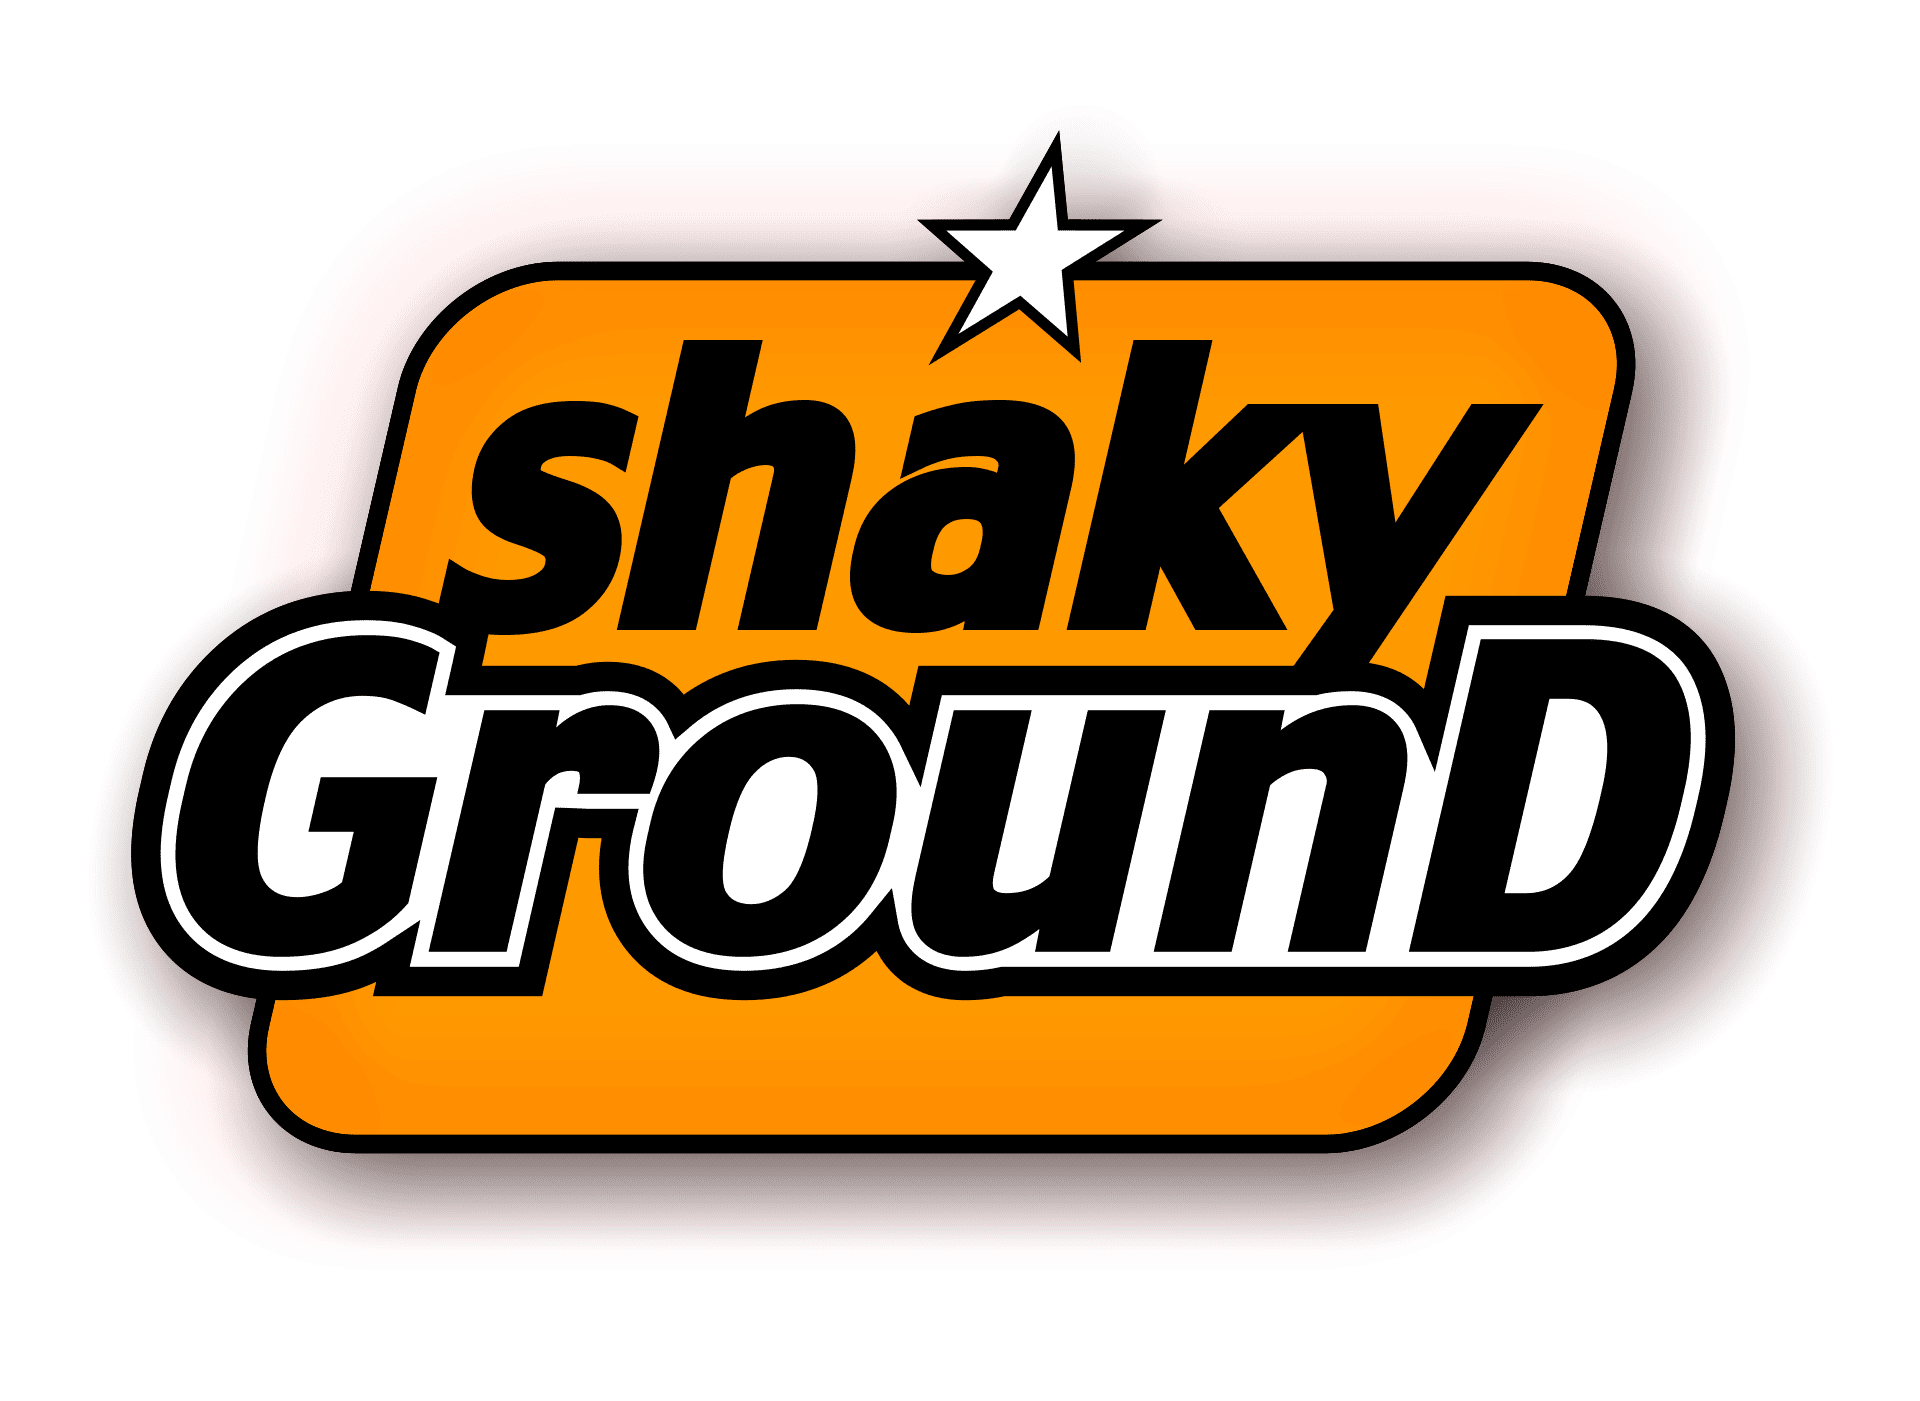 Shaky Ground (70's, 80's and 90's band)